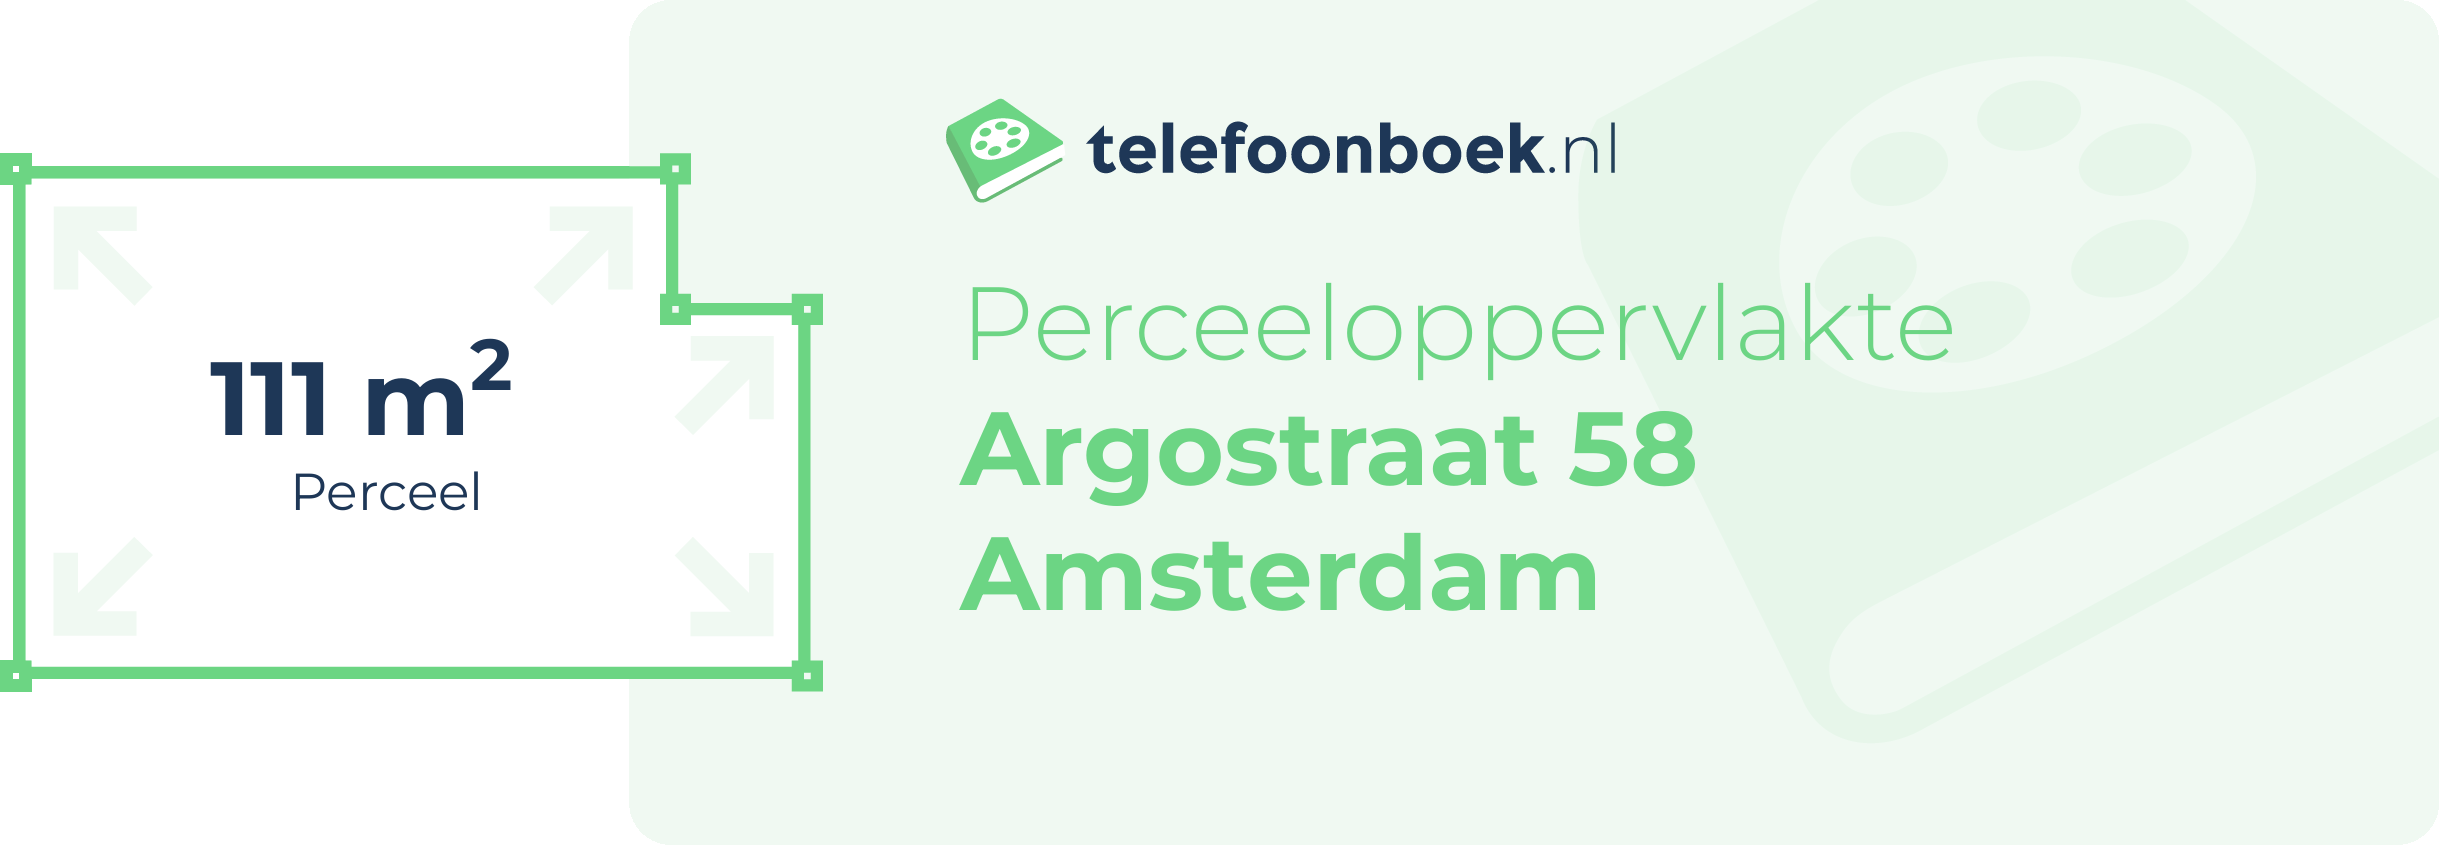 Perceeloppervlakte Argostraat 58 Amsterdam